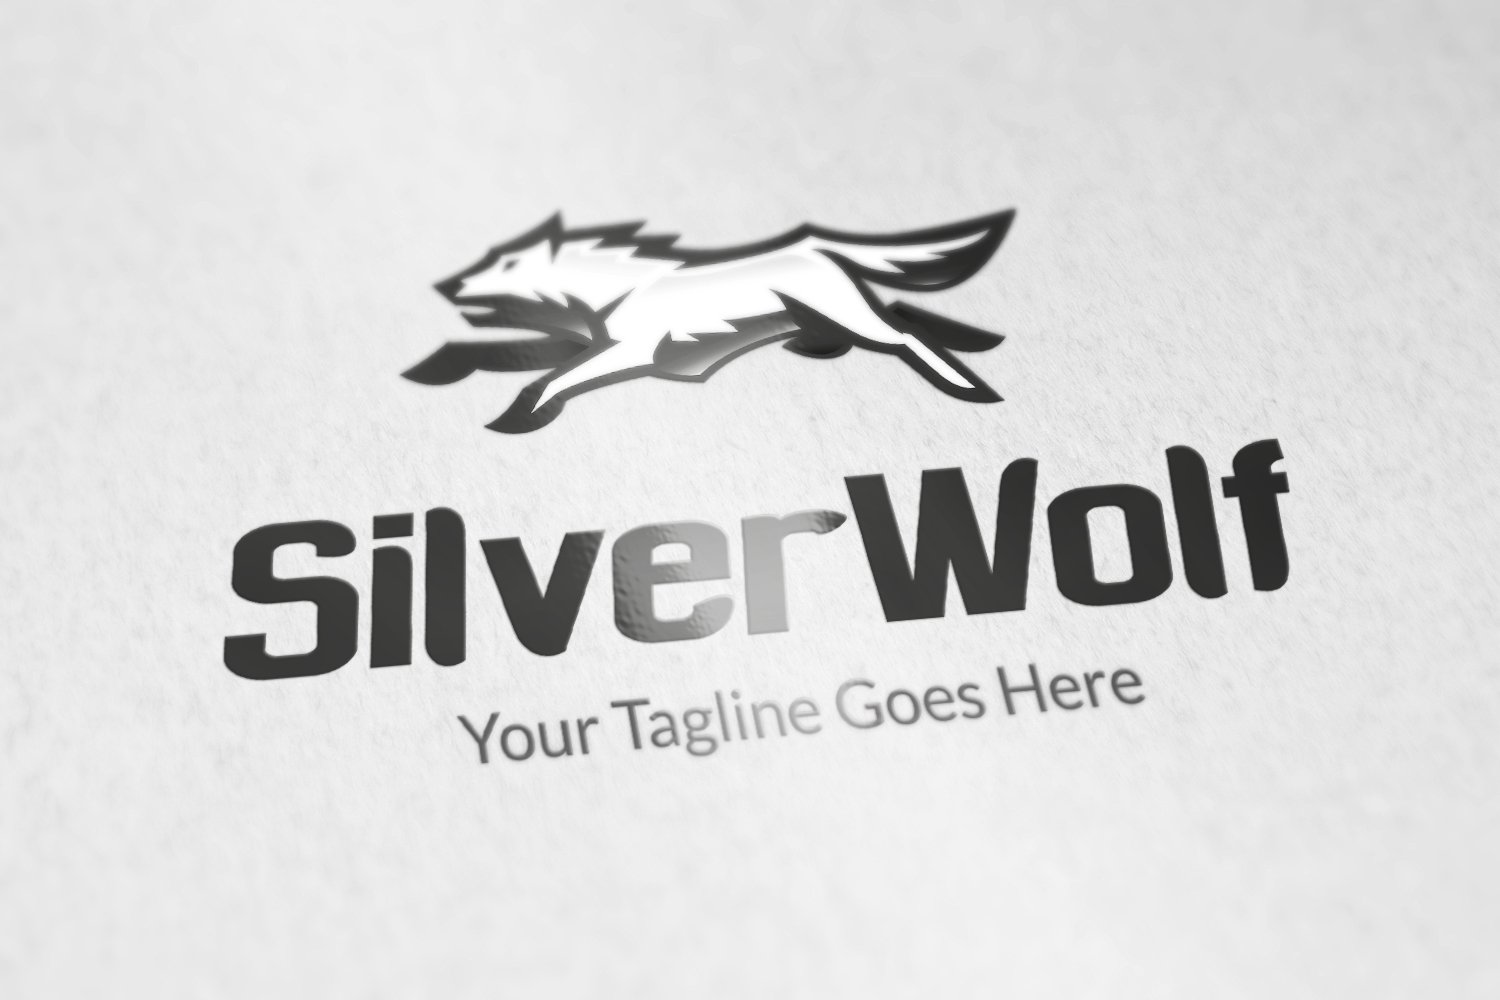 silverwolf logo cover image.